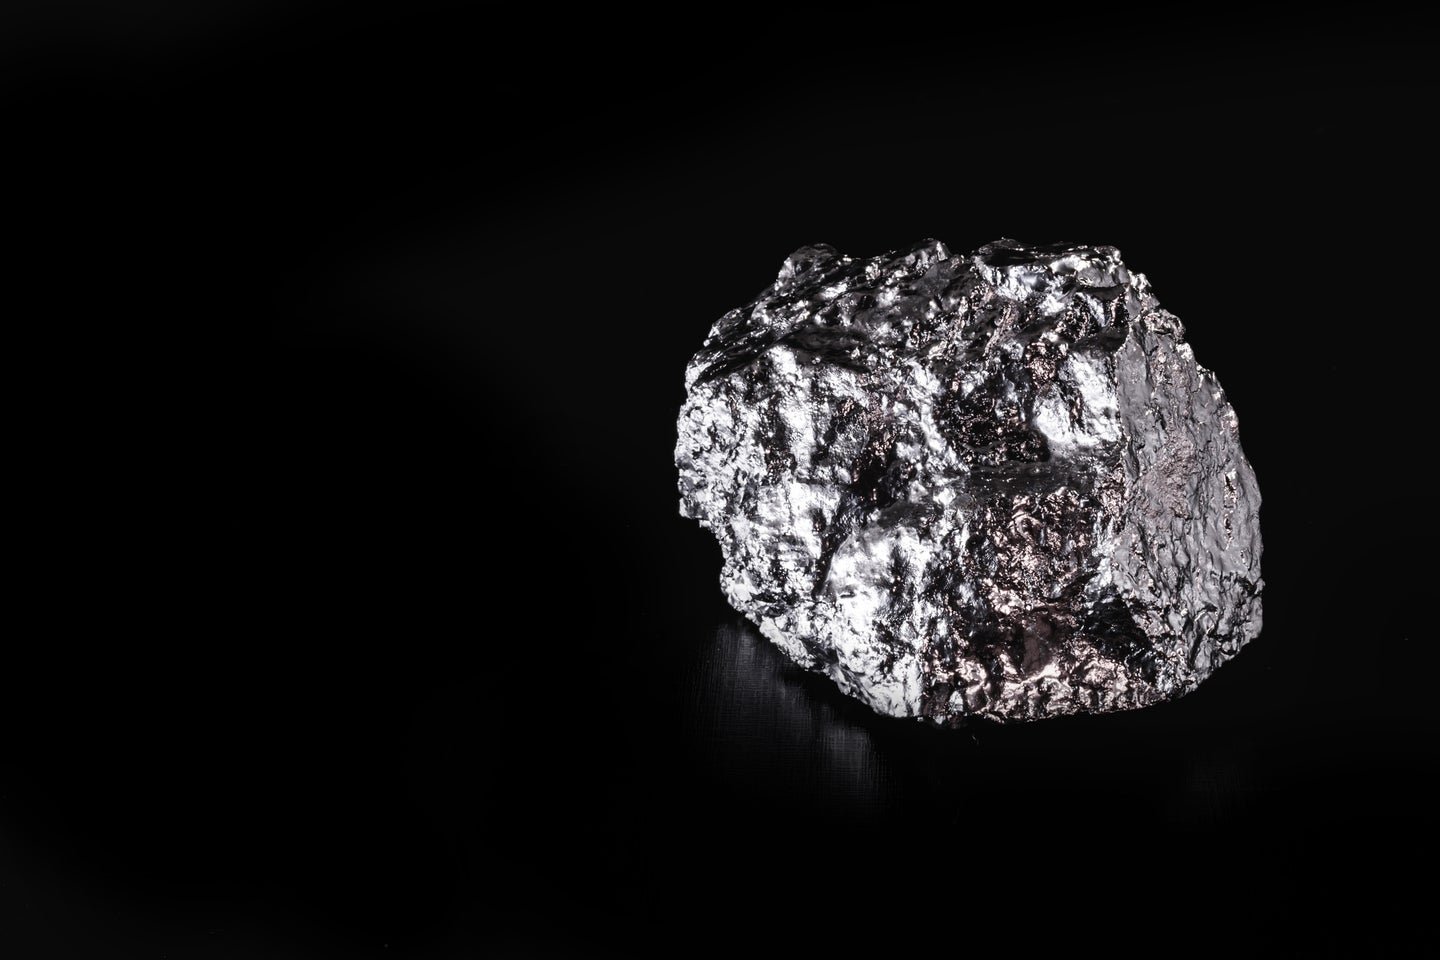 Rare platinum ore nugget on a black background